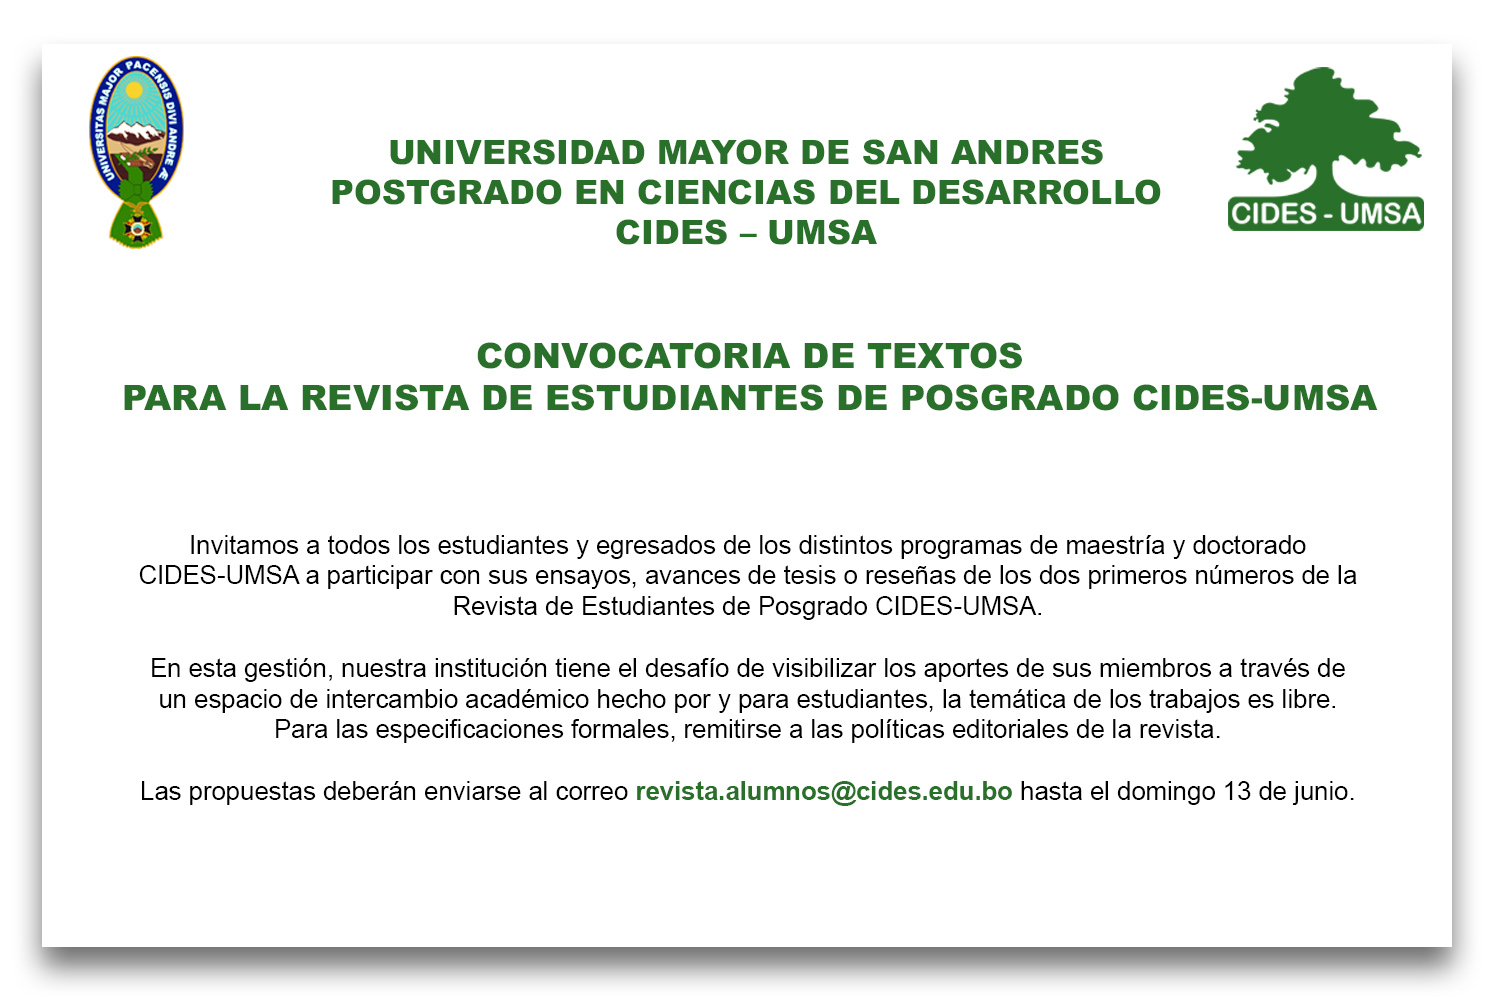 Convocatoria de textos para la Revista de Estudiantes de Posgrado CIDES-UMSA